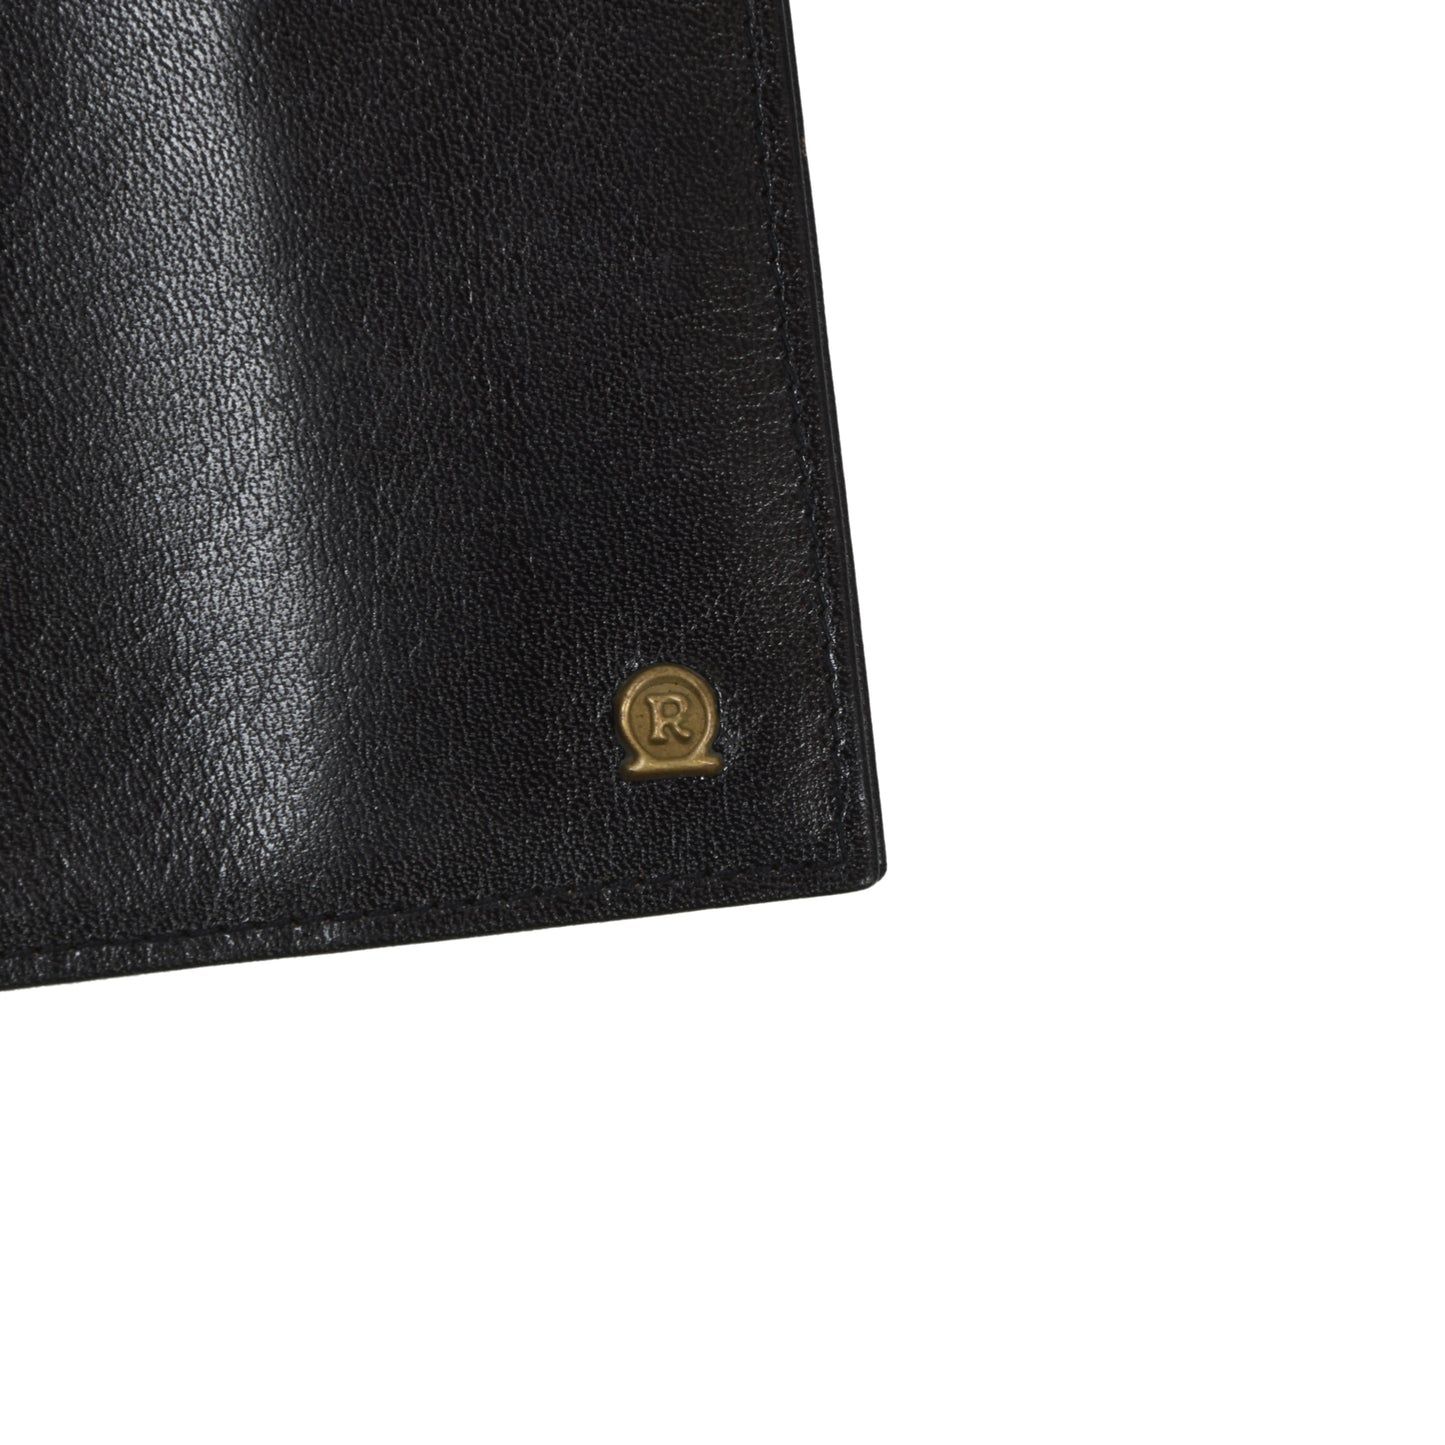 2x Leather Passport Cases/Wallets - Black